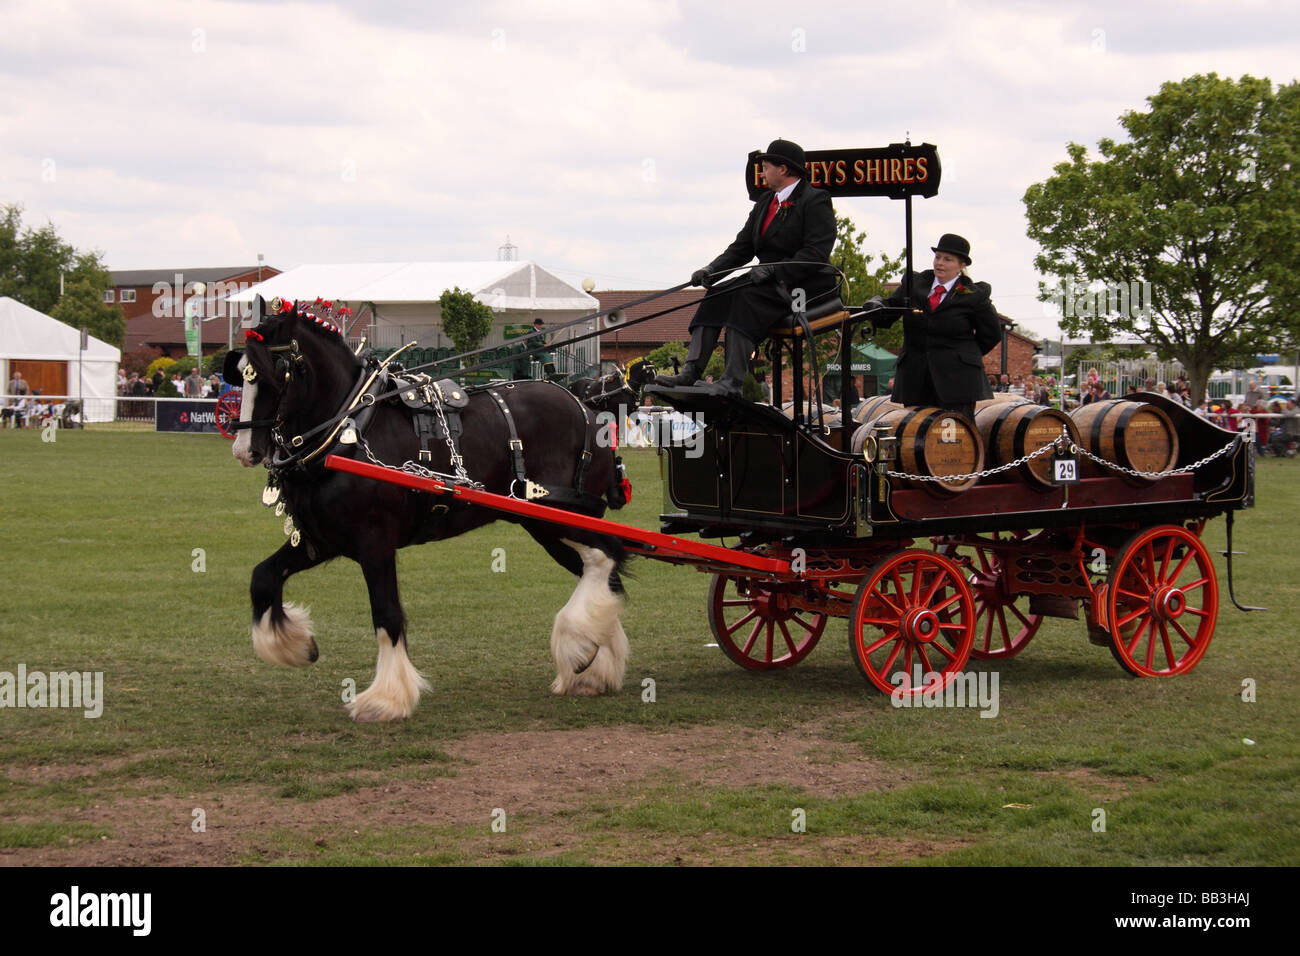 Schweren Pferd ziehen Schlitten Nottinghamshire county Show Pferd Tier Säugetier arbeiten vorbei viktorianischen Zeiten historischen Kleid Stockfoto